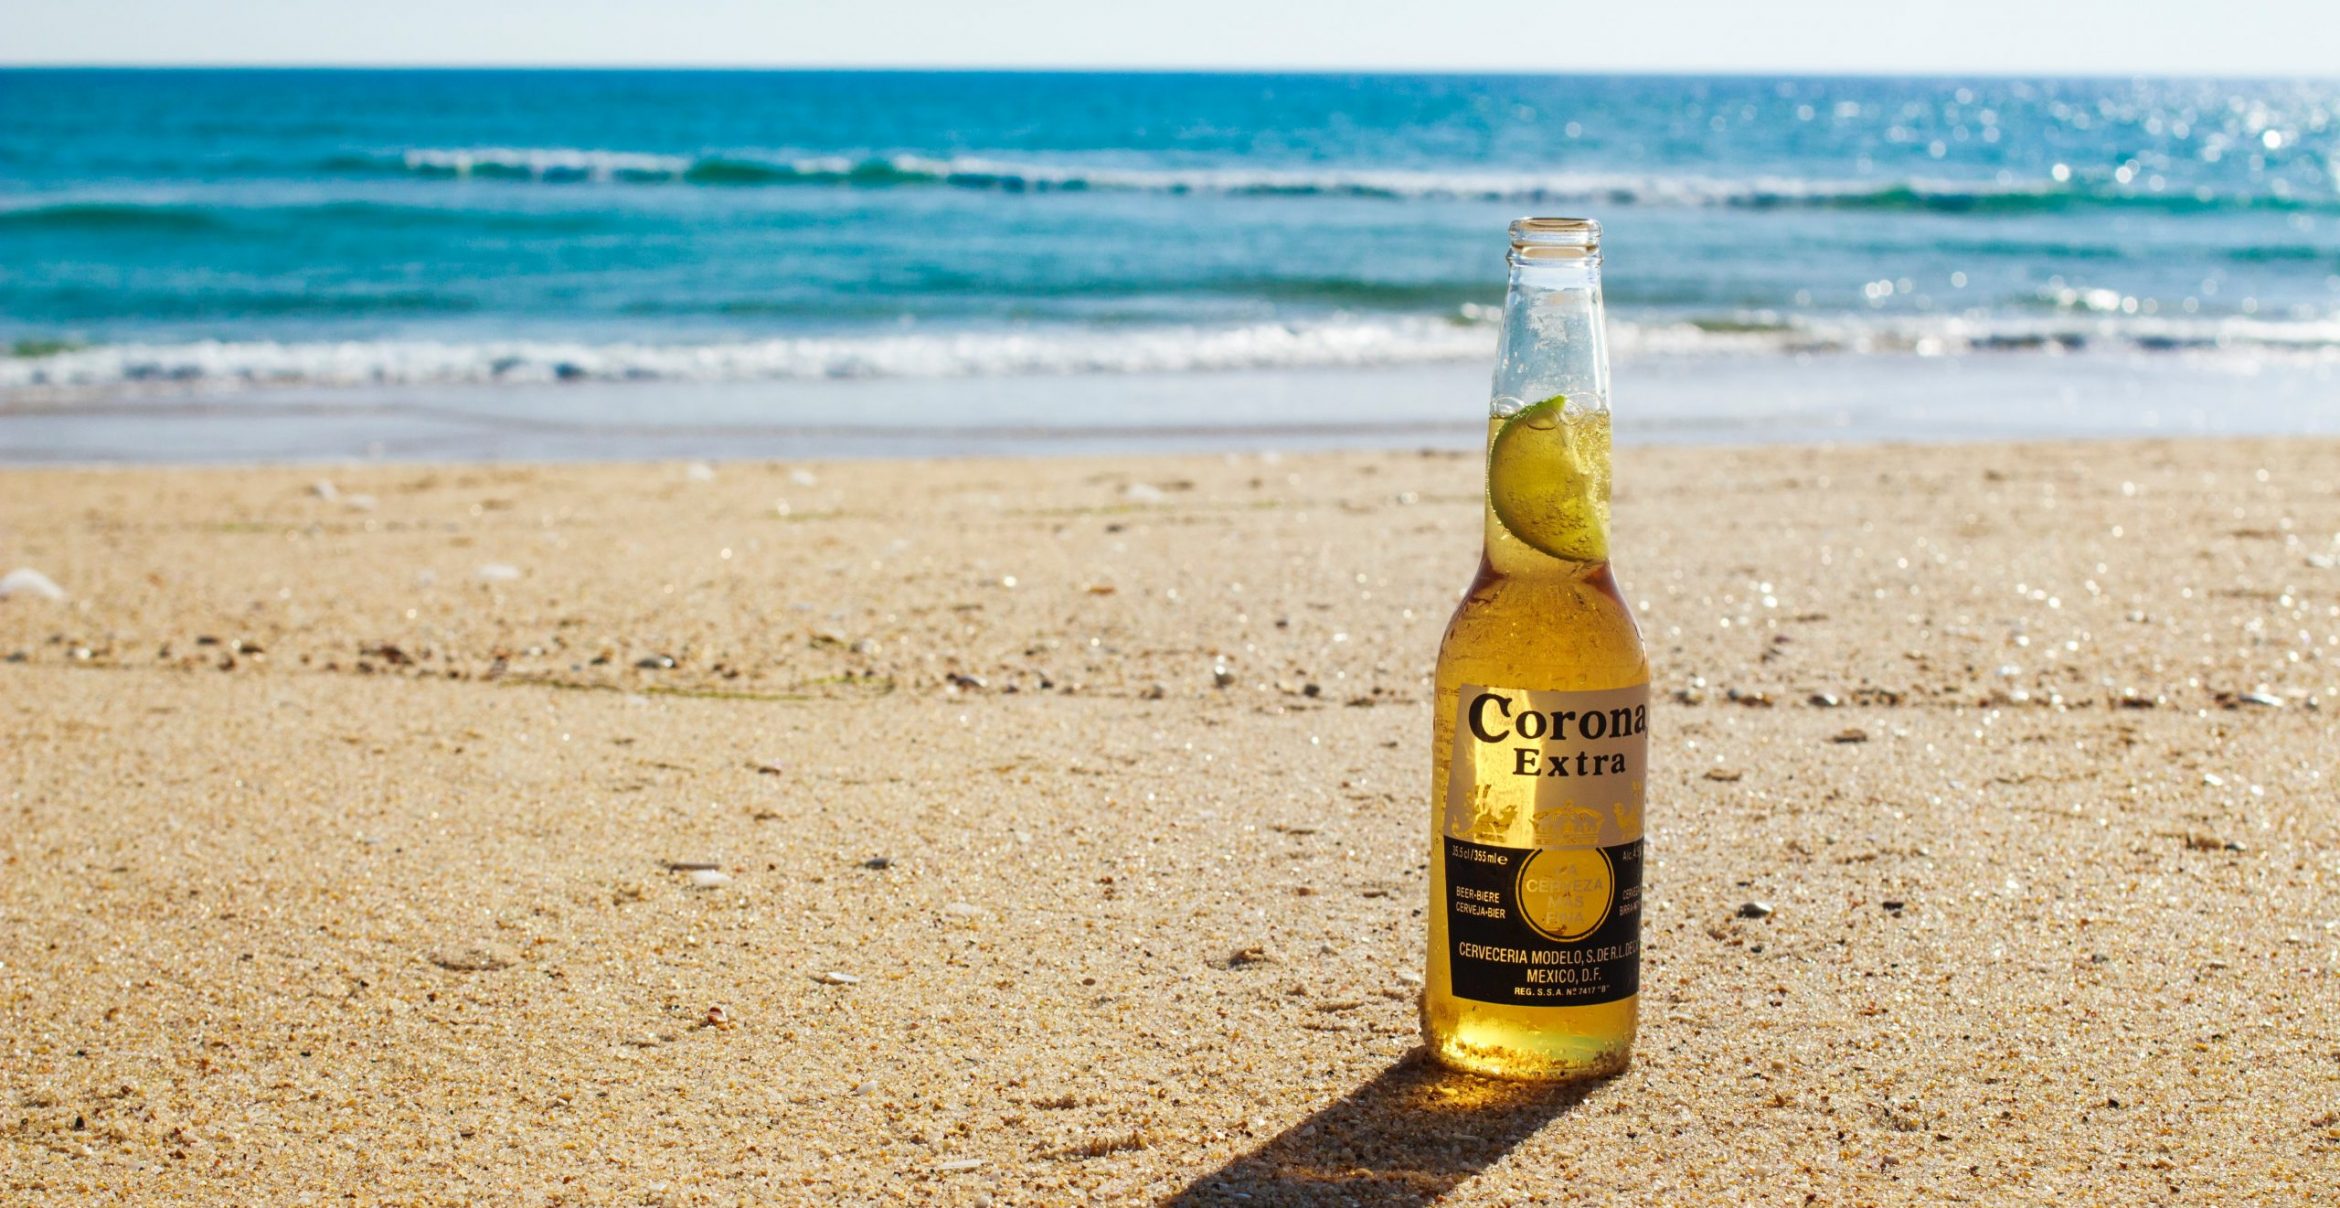 Irrationale Verbindung: Trinken wegen des Coronavirus weniger Leute das Bier Corona?